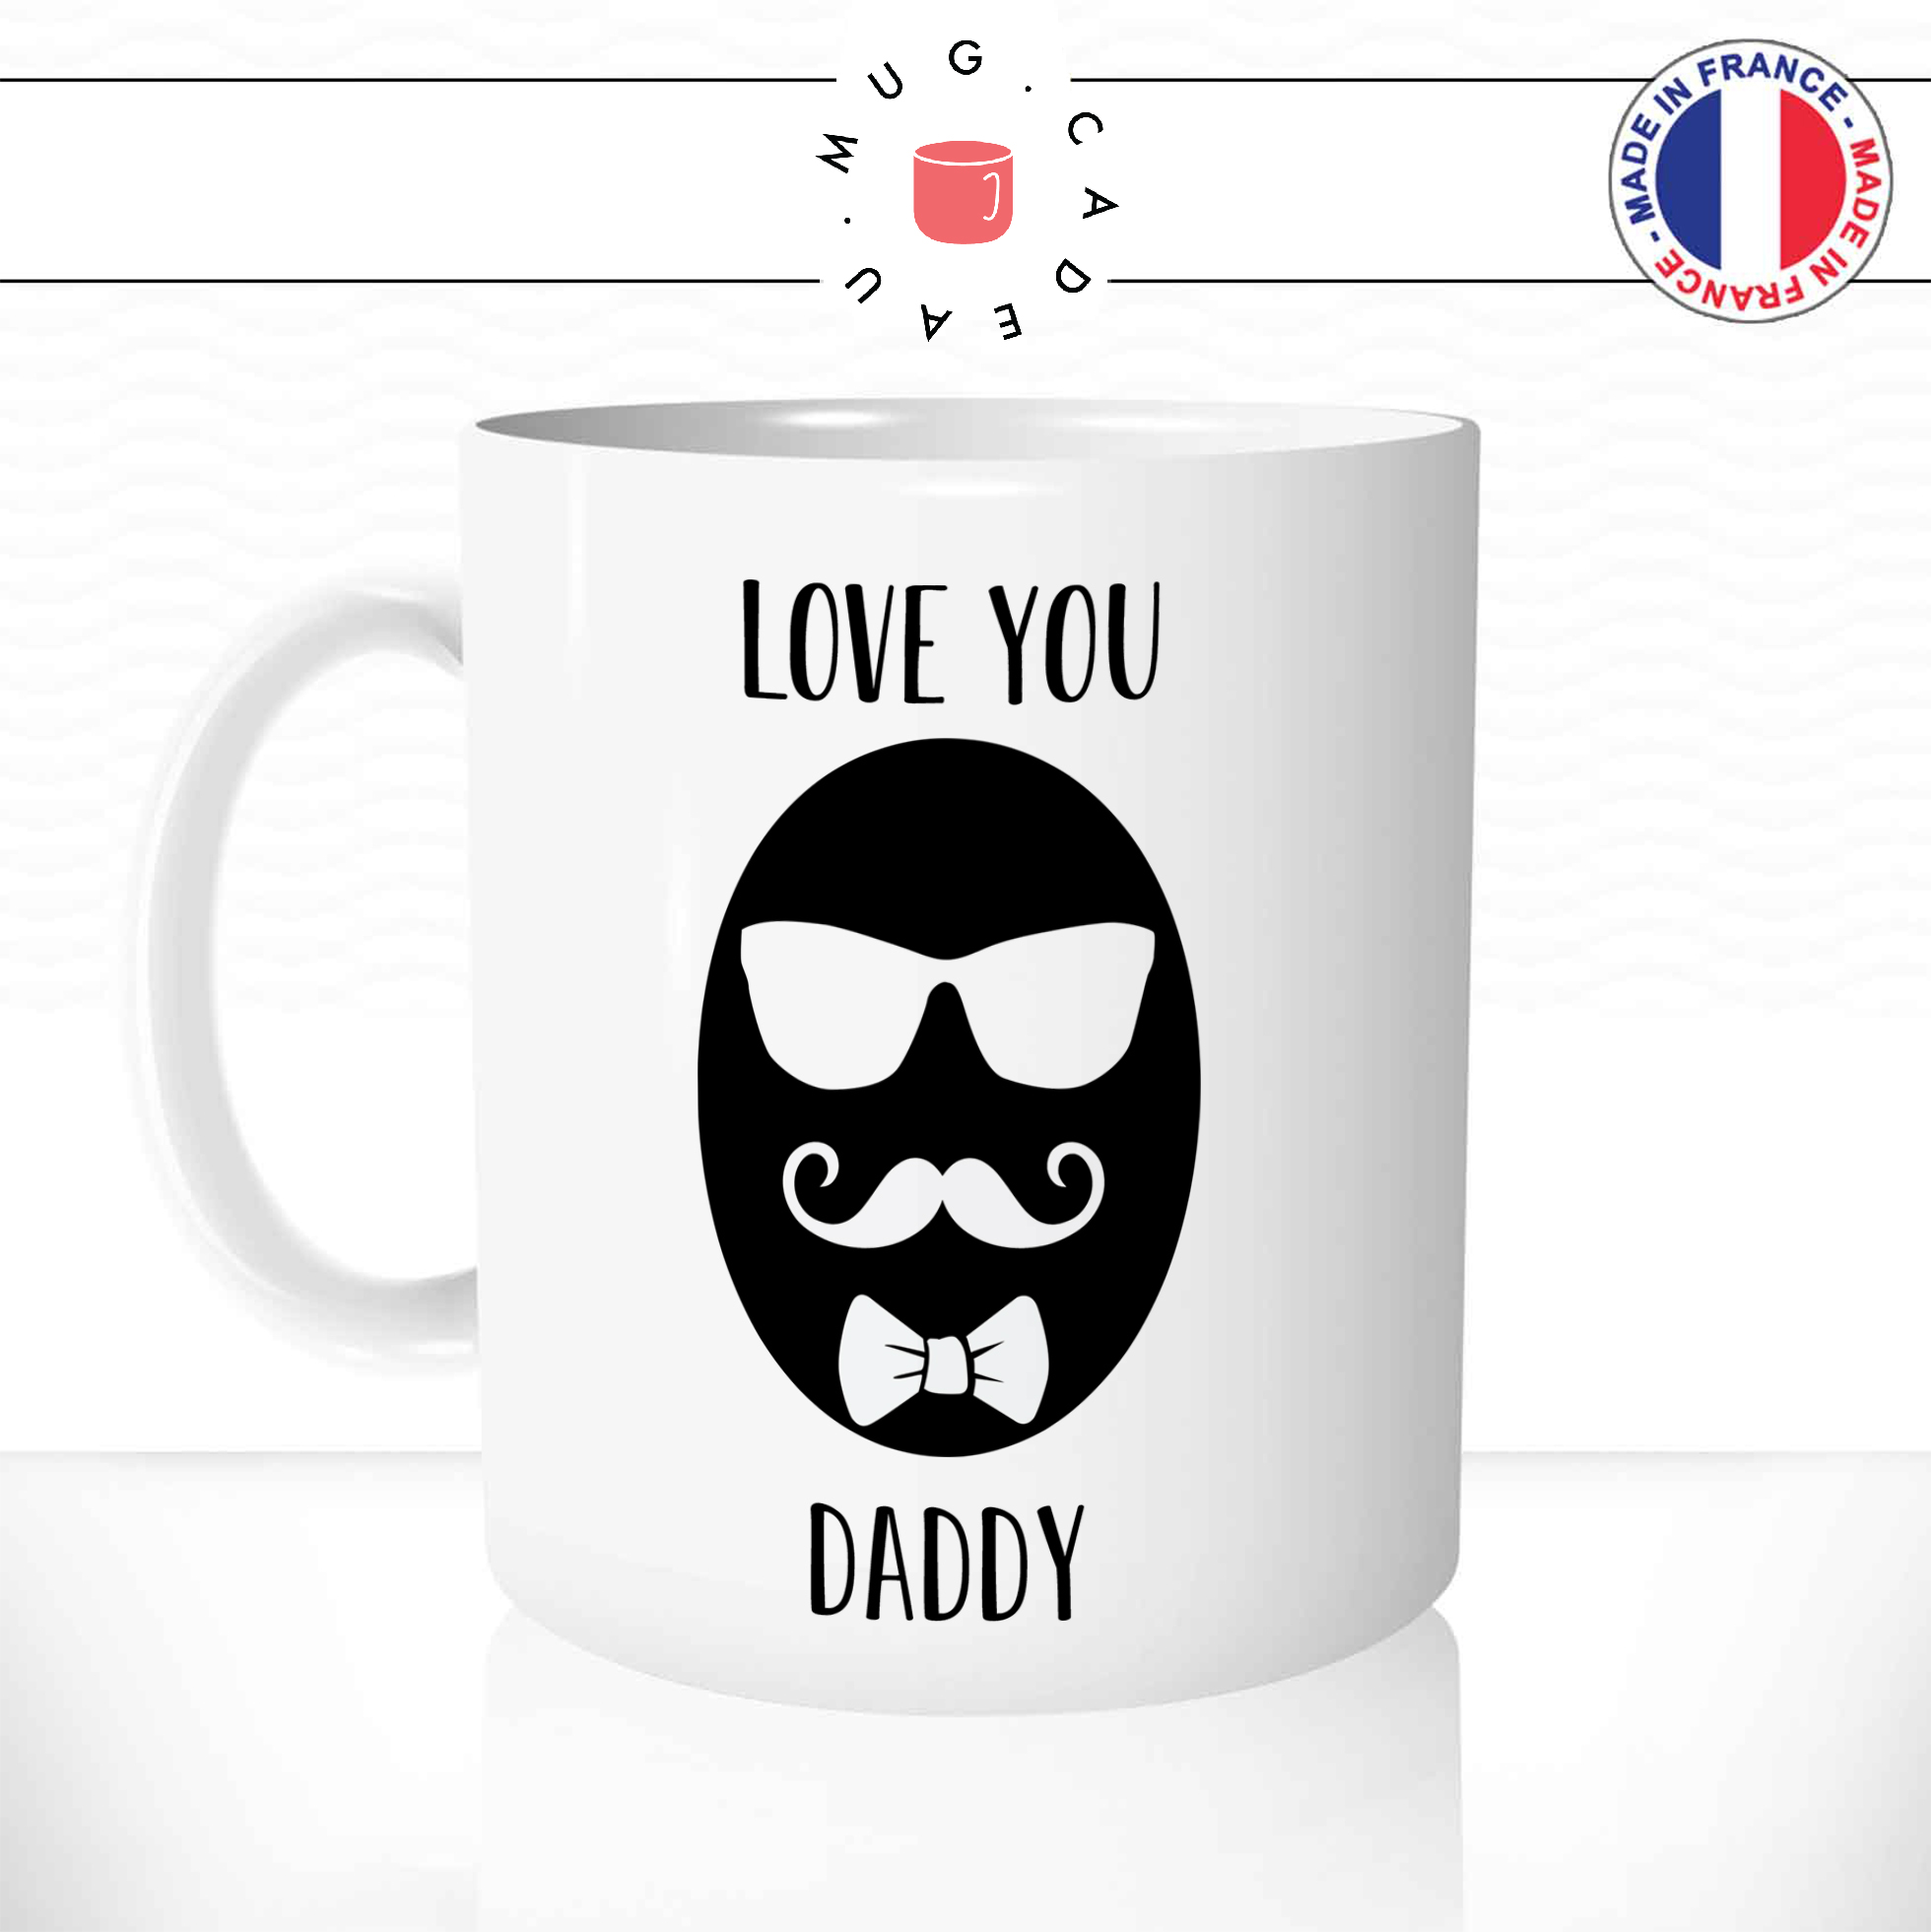 mug-tasse-ref13-fete-des-peres-love-you-daddy-lunettes-moustache-noeud-papillon-cafe-the-mugs-tasses-personnalise-anse-gauche